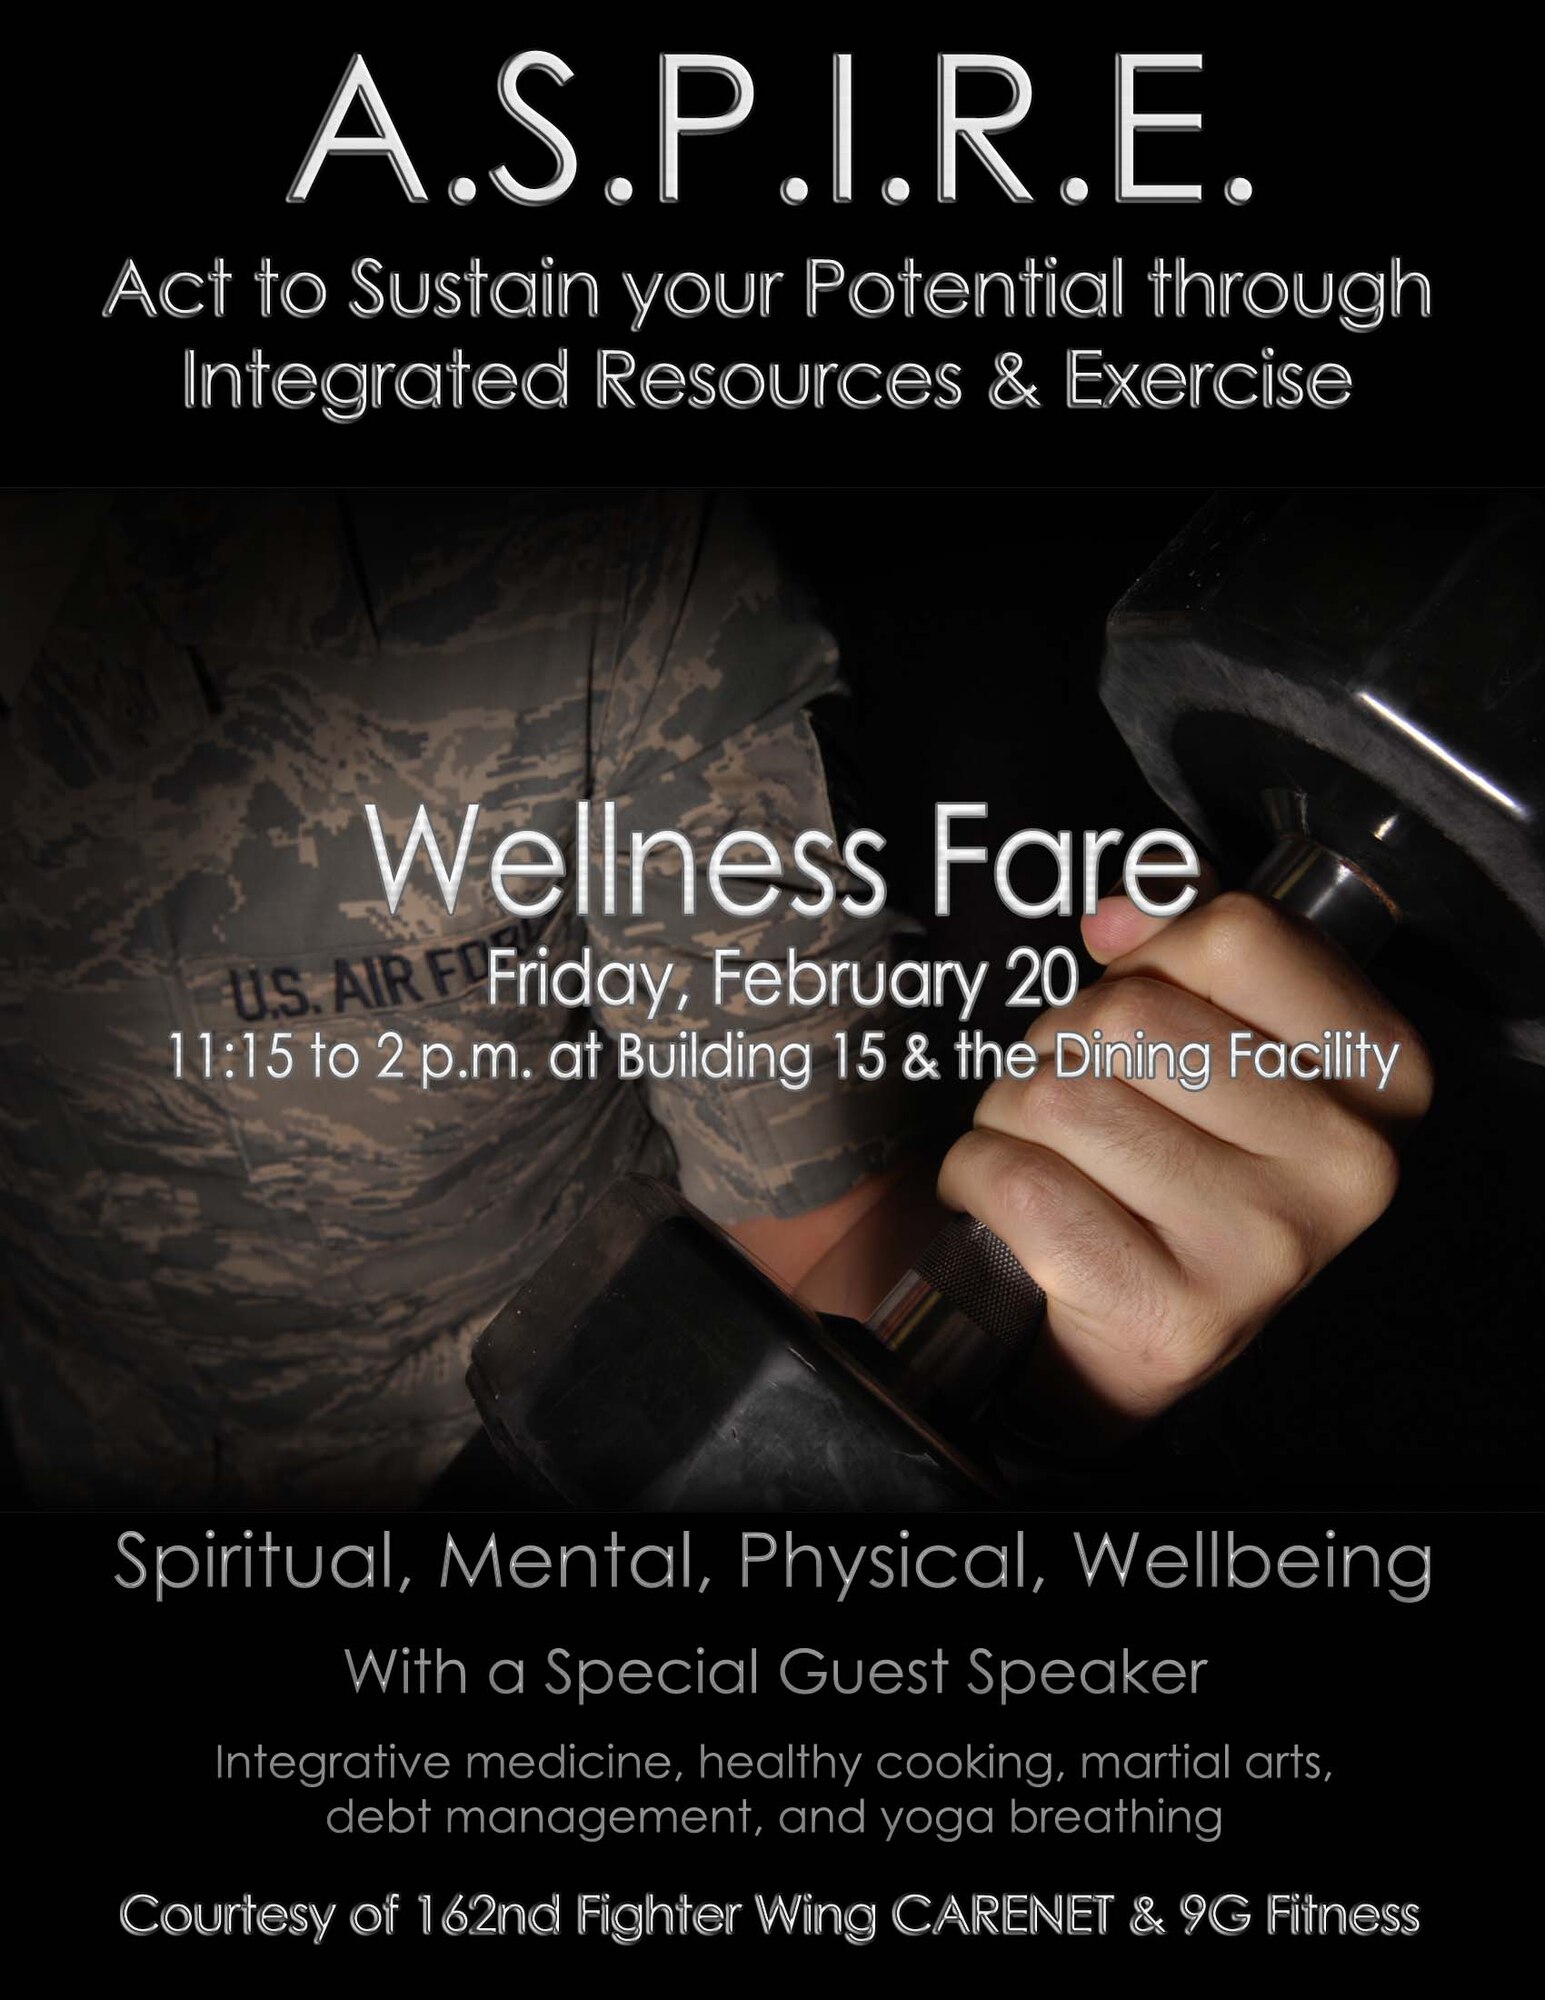 A.S.P.I.R.E. Wellness Fare, Feb. 20